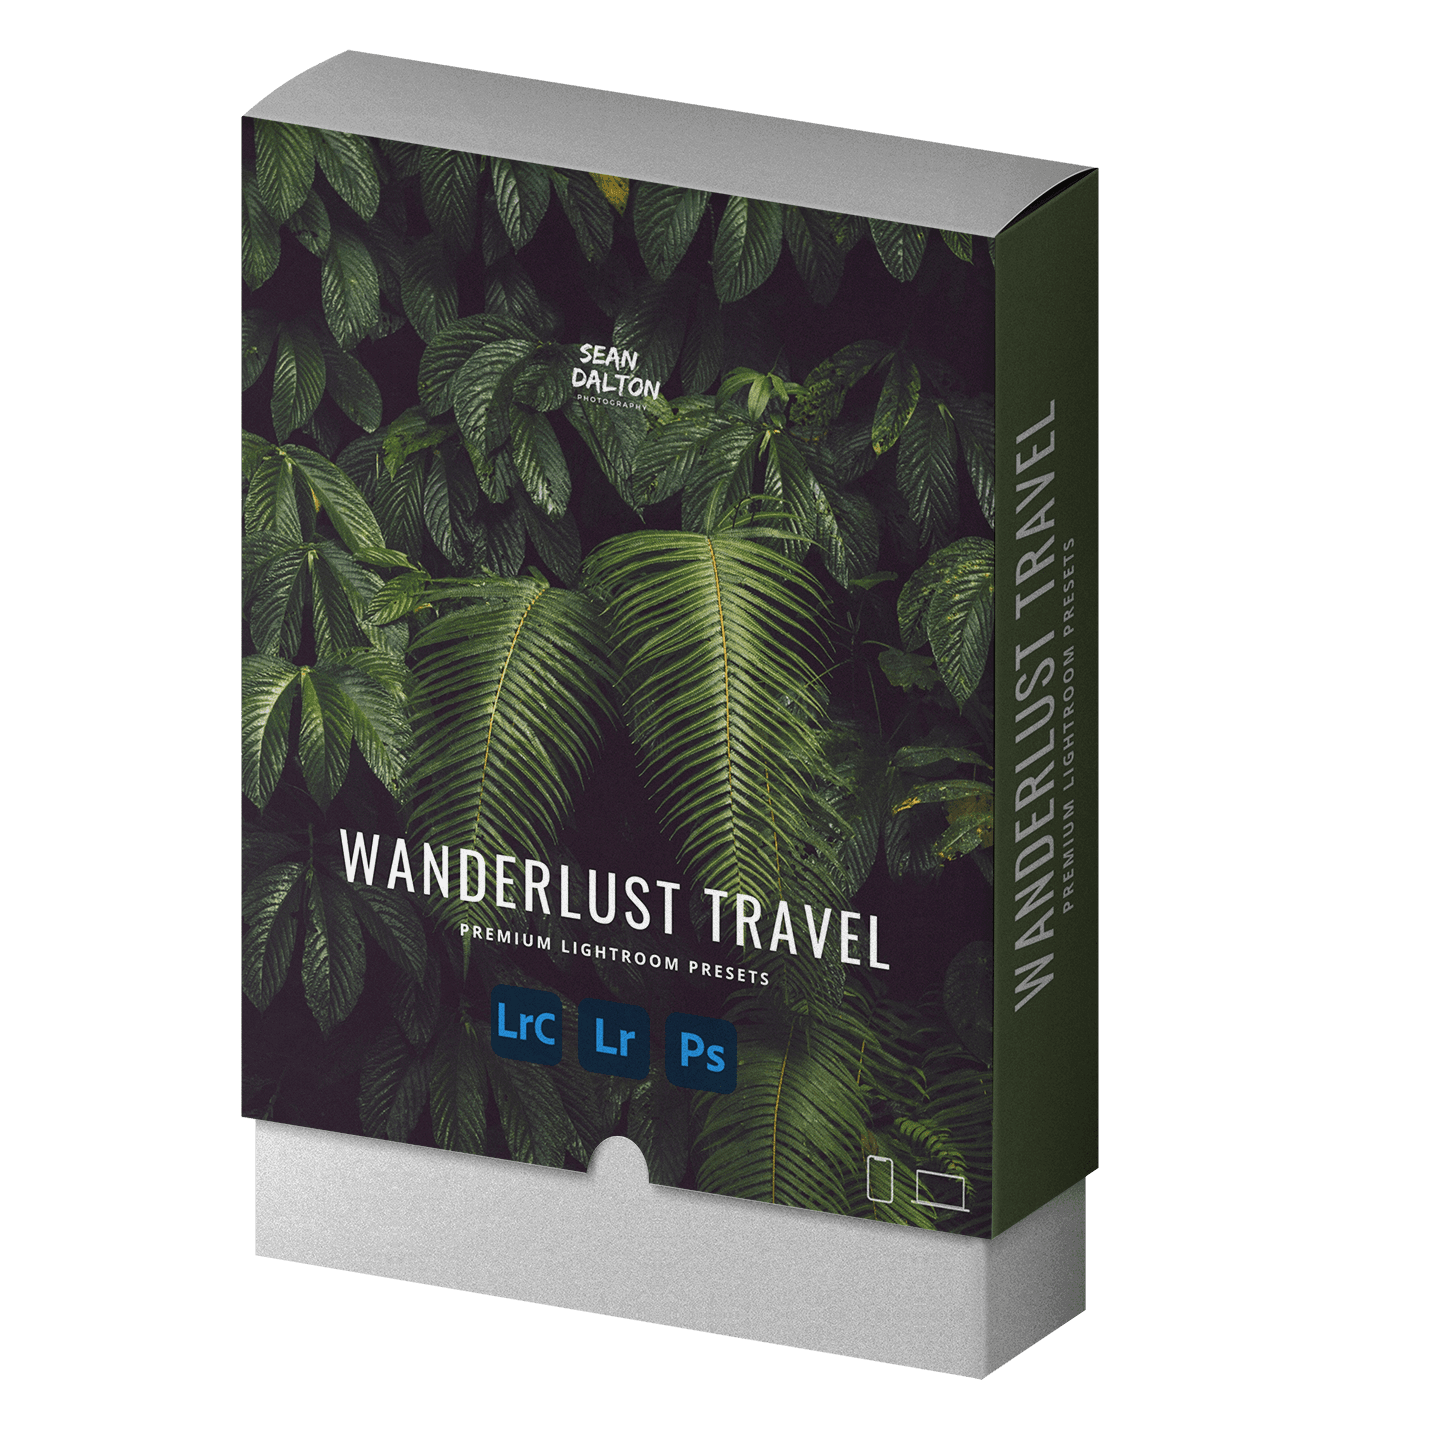 Sean Dalton - Travel & Adventure Presets